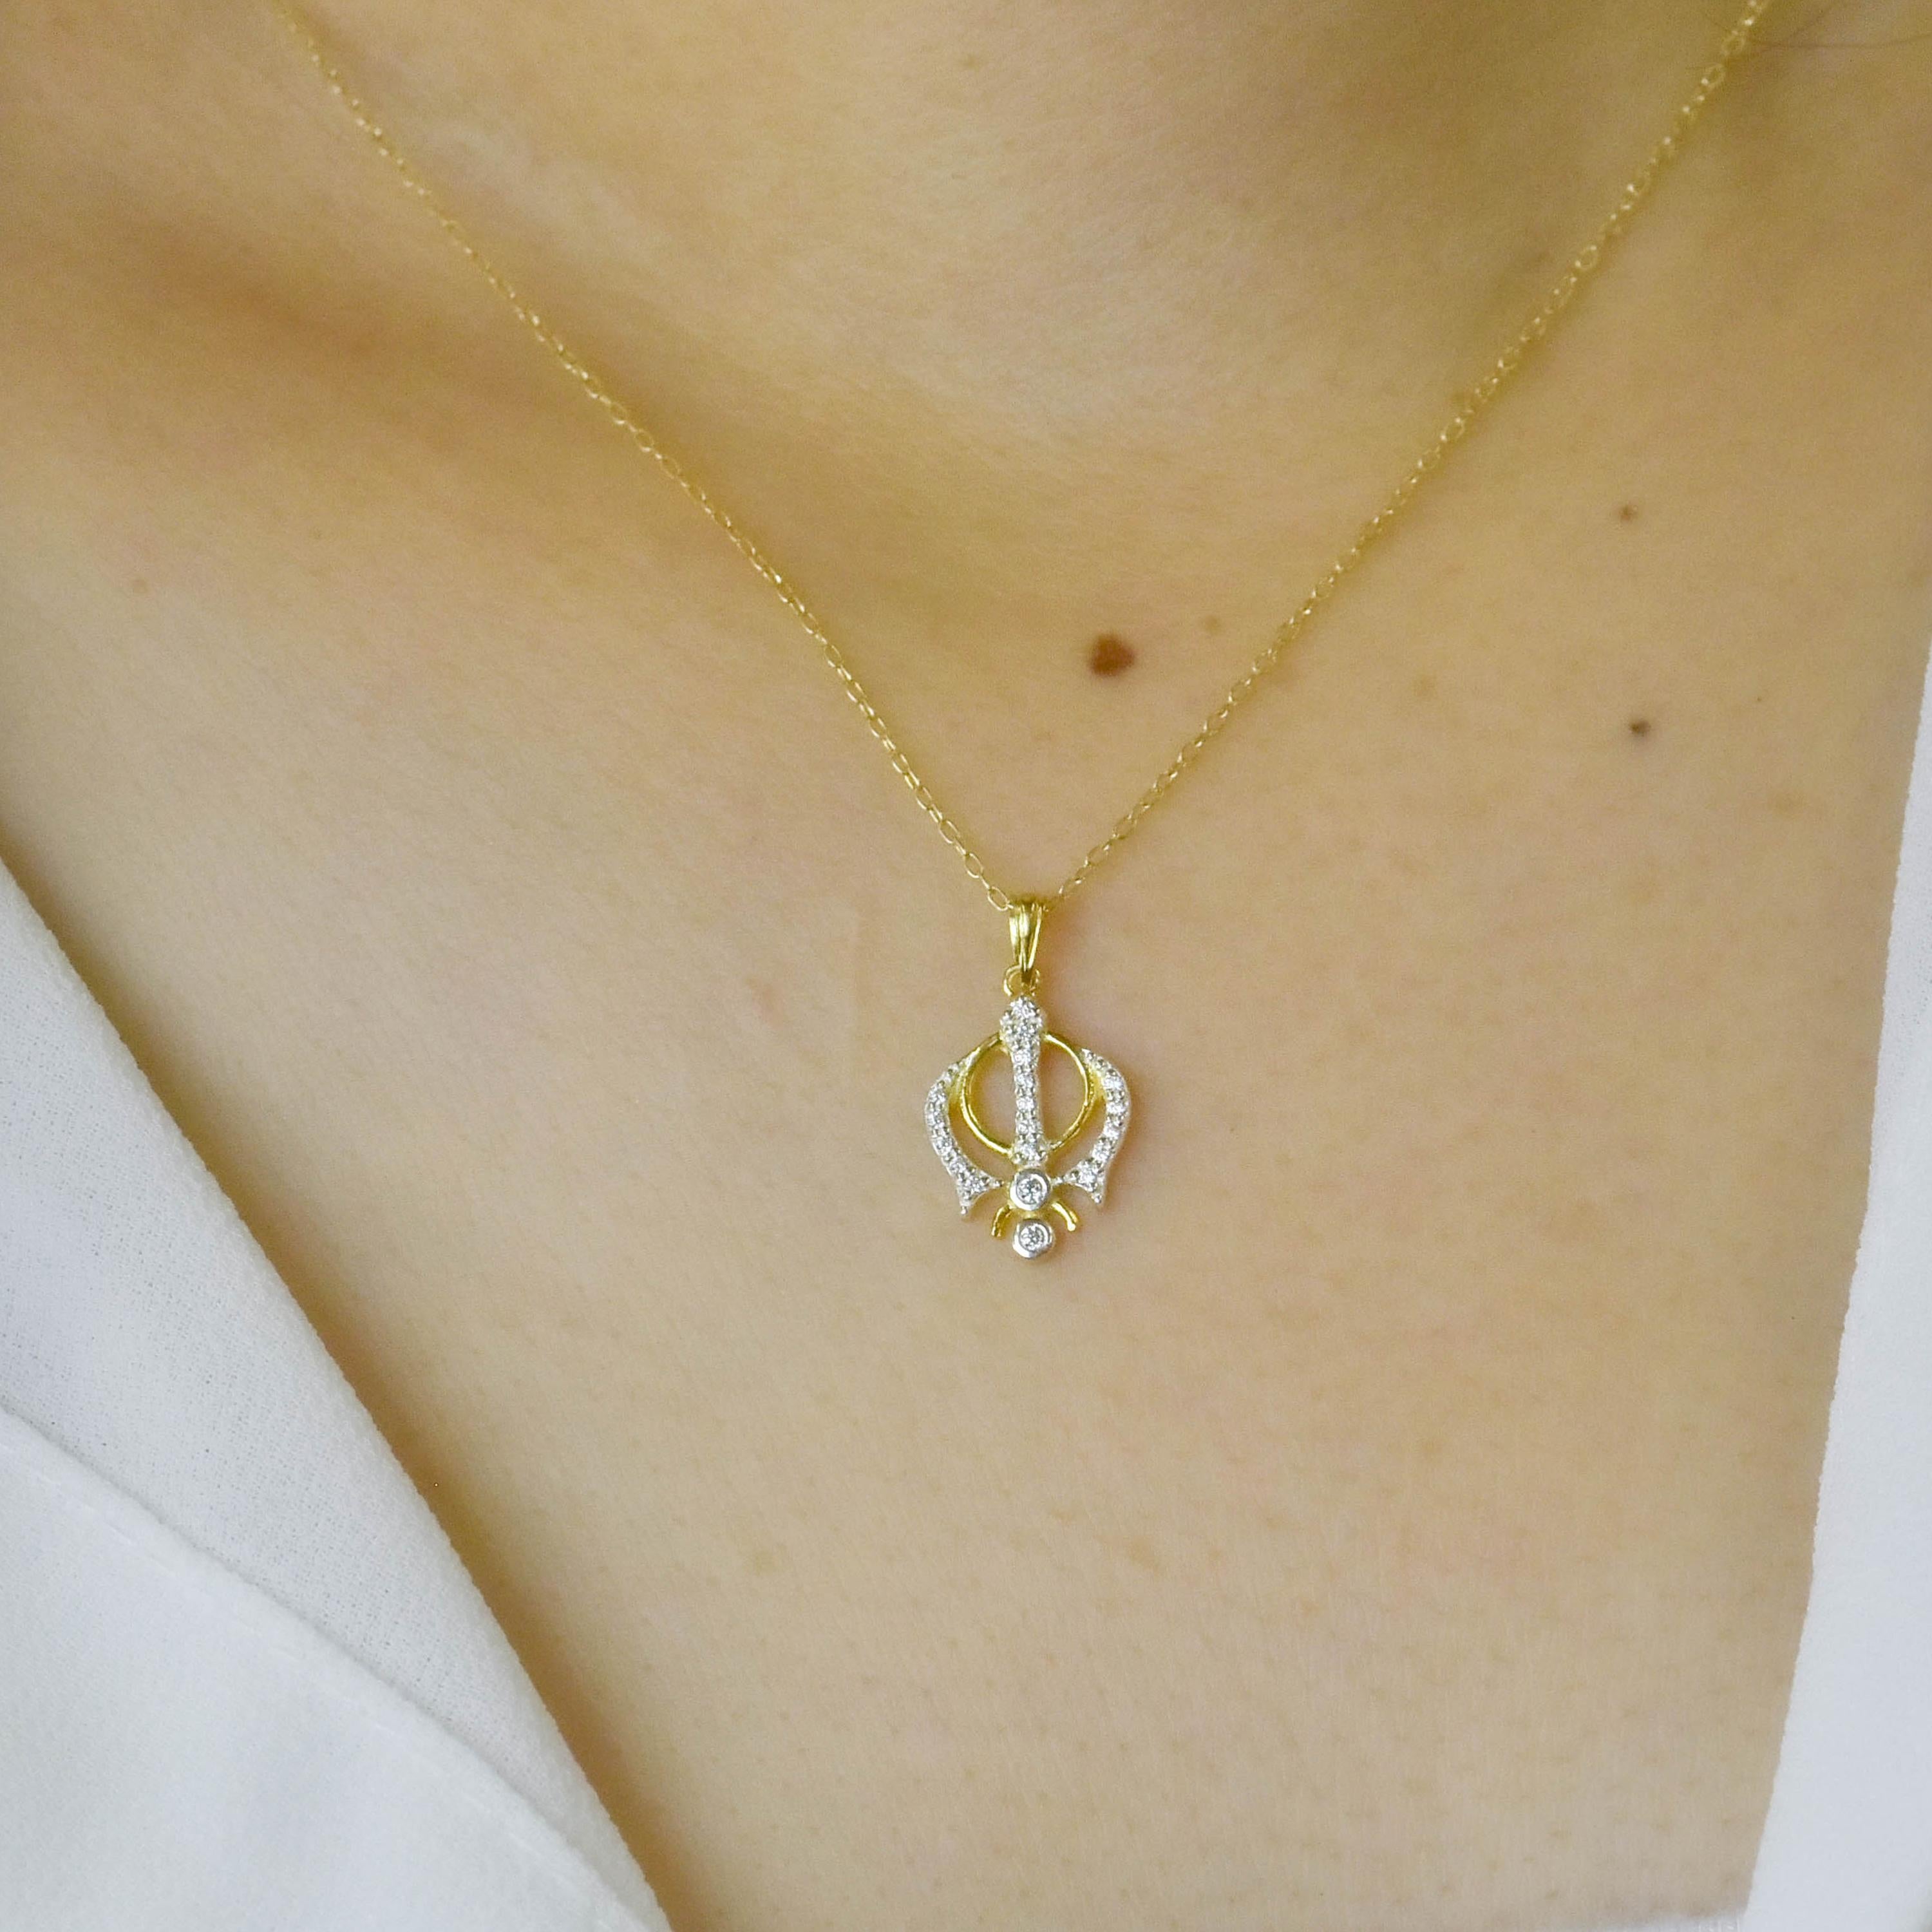 khanda necklace gold